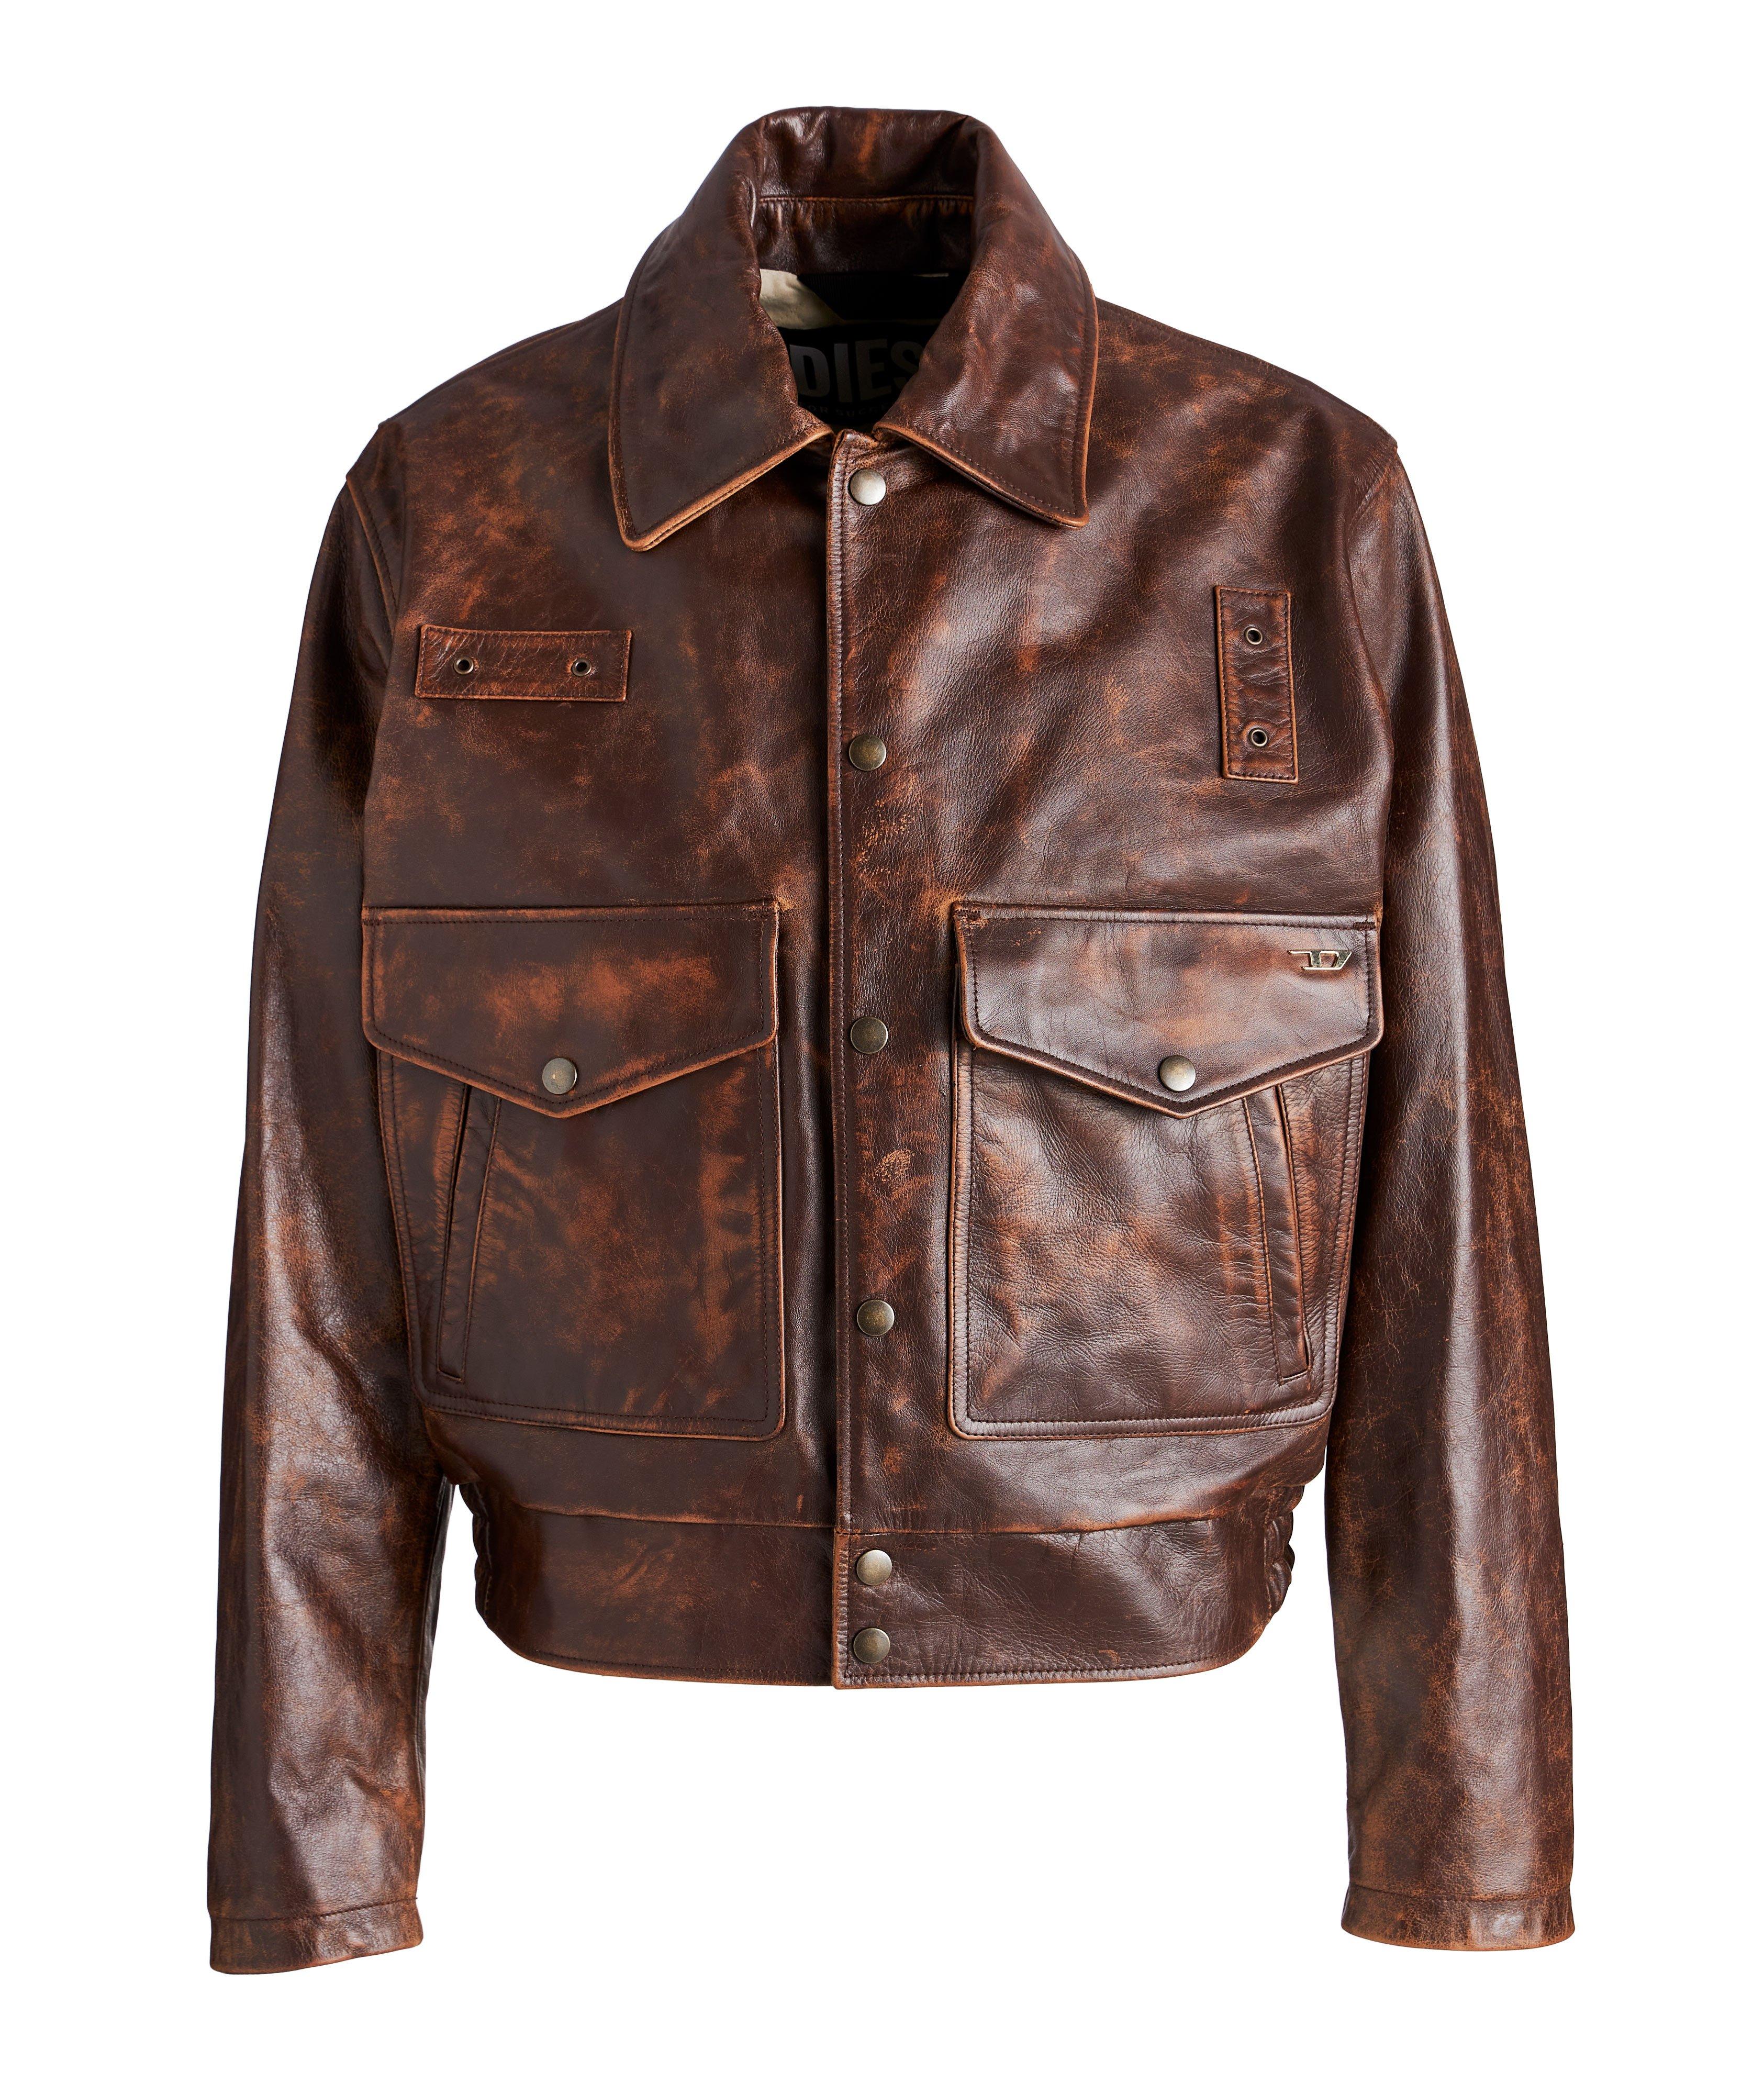 L-Muddy Leather Jacket image 0